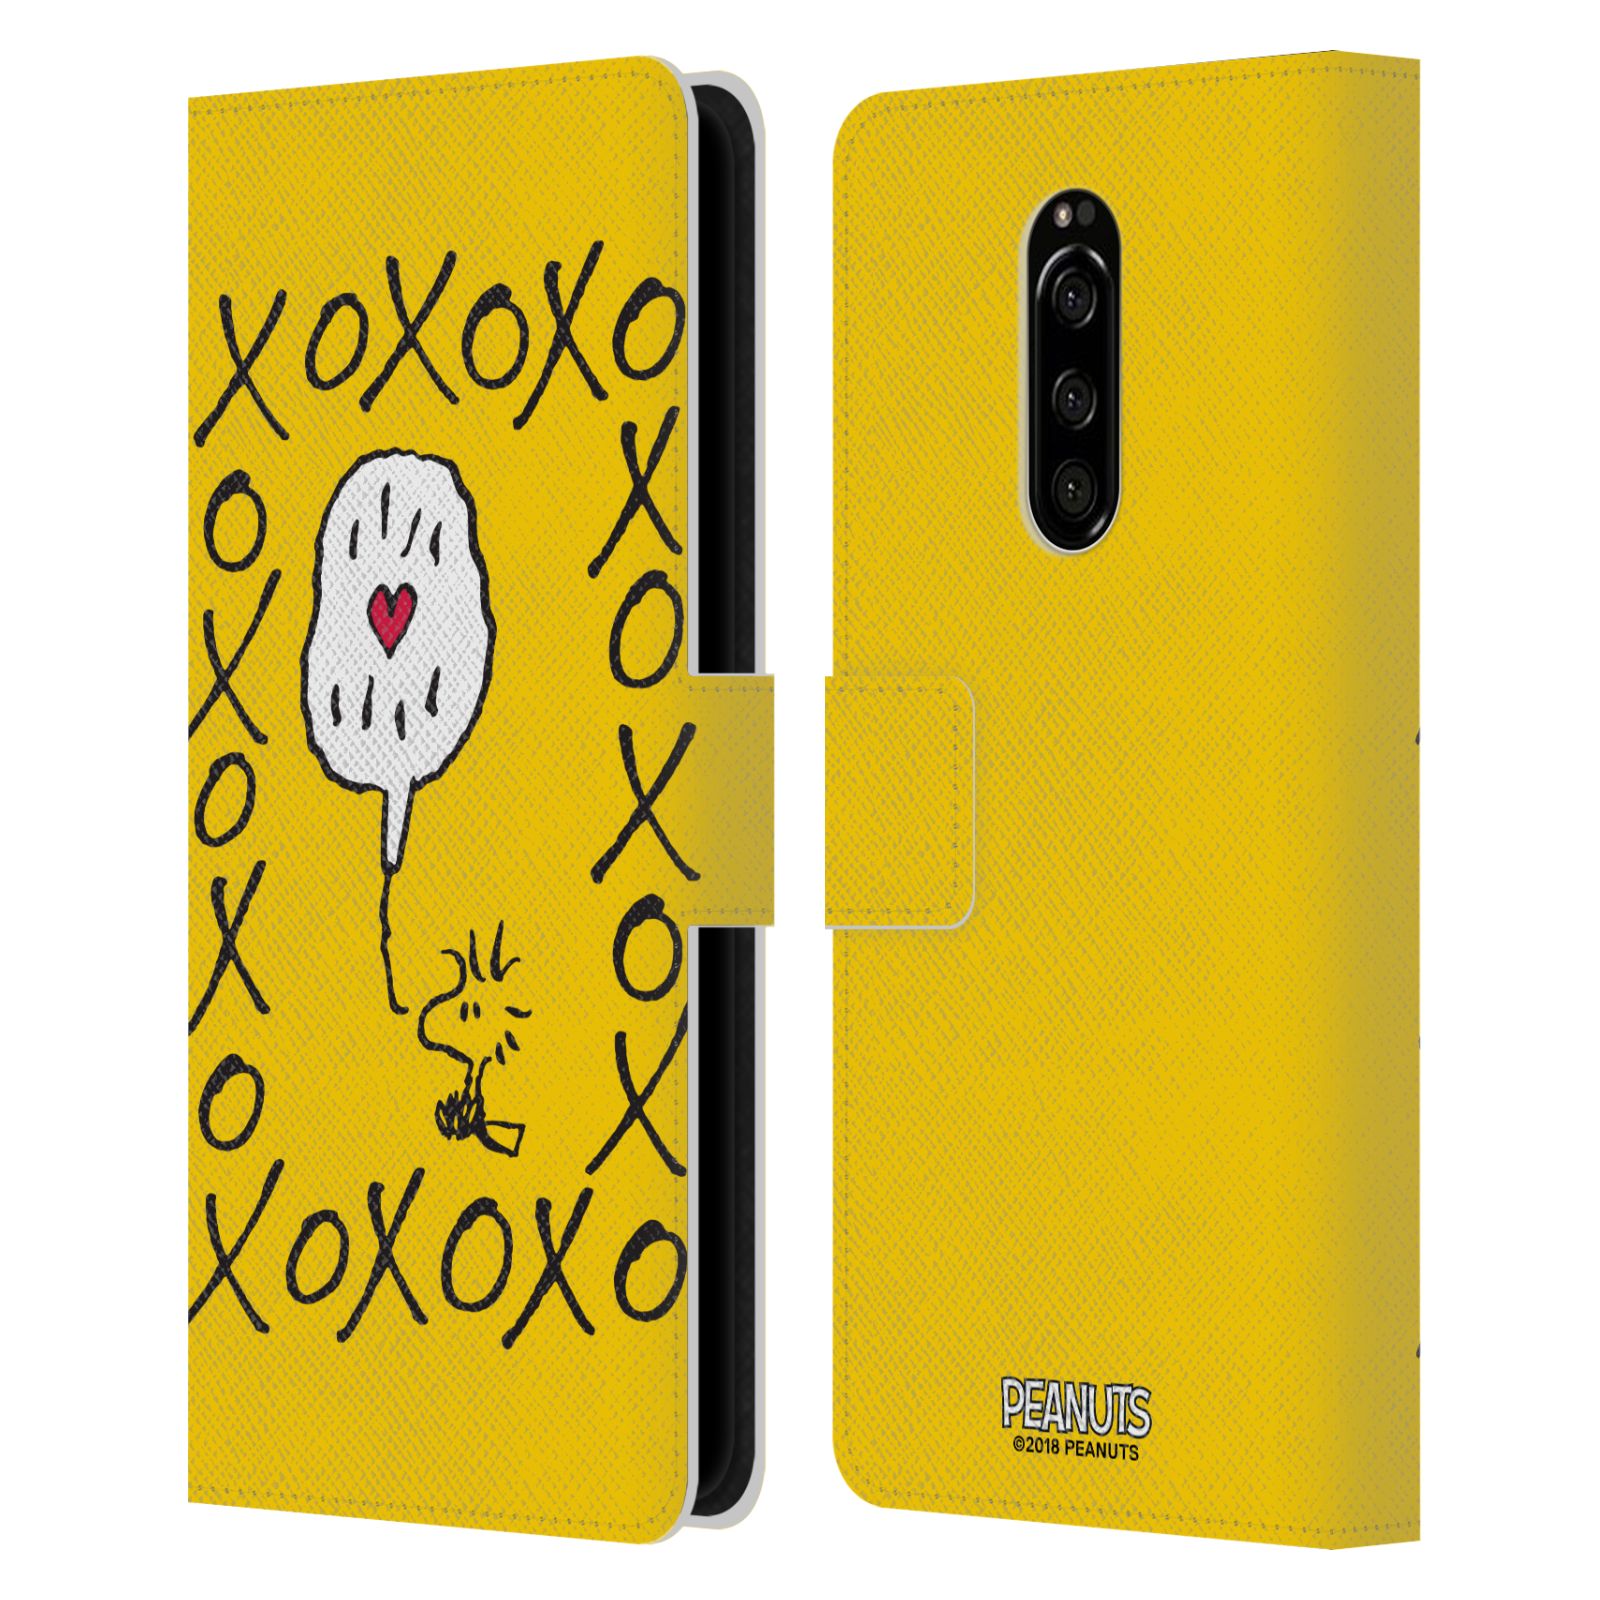 Pouzdro na mobil Sony Xperia 1 - Head Case - Peanuts - Woodstock ptáček XOXO